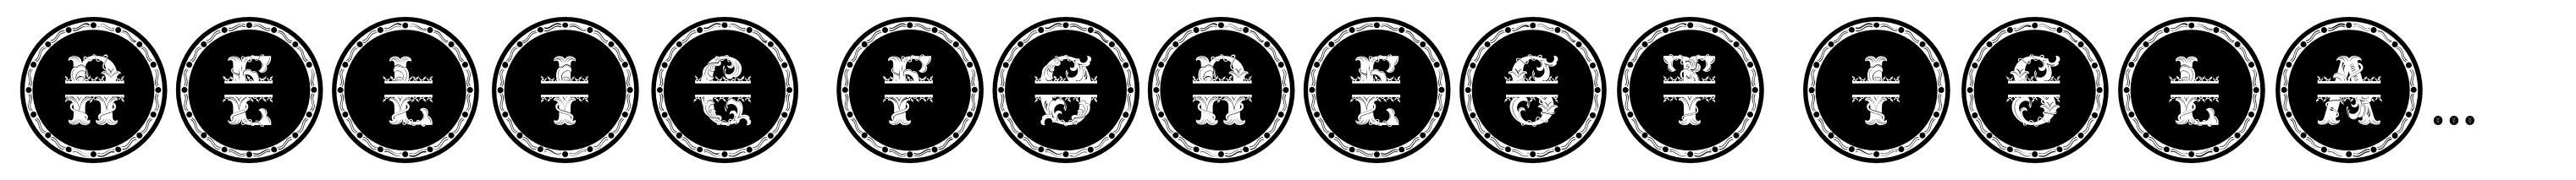 Relic Forest Island 3 Monogram circle black Simple